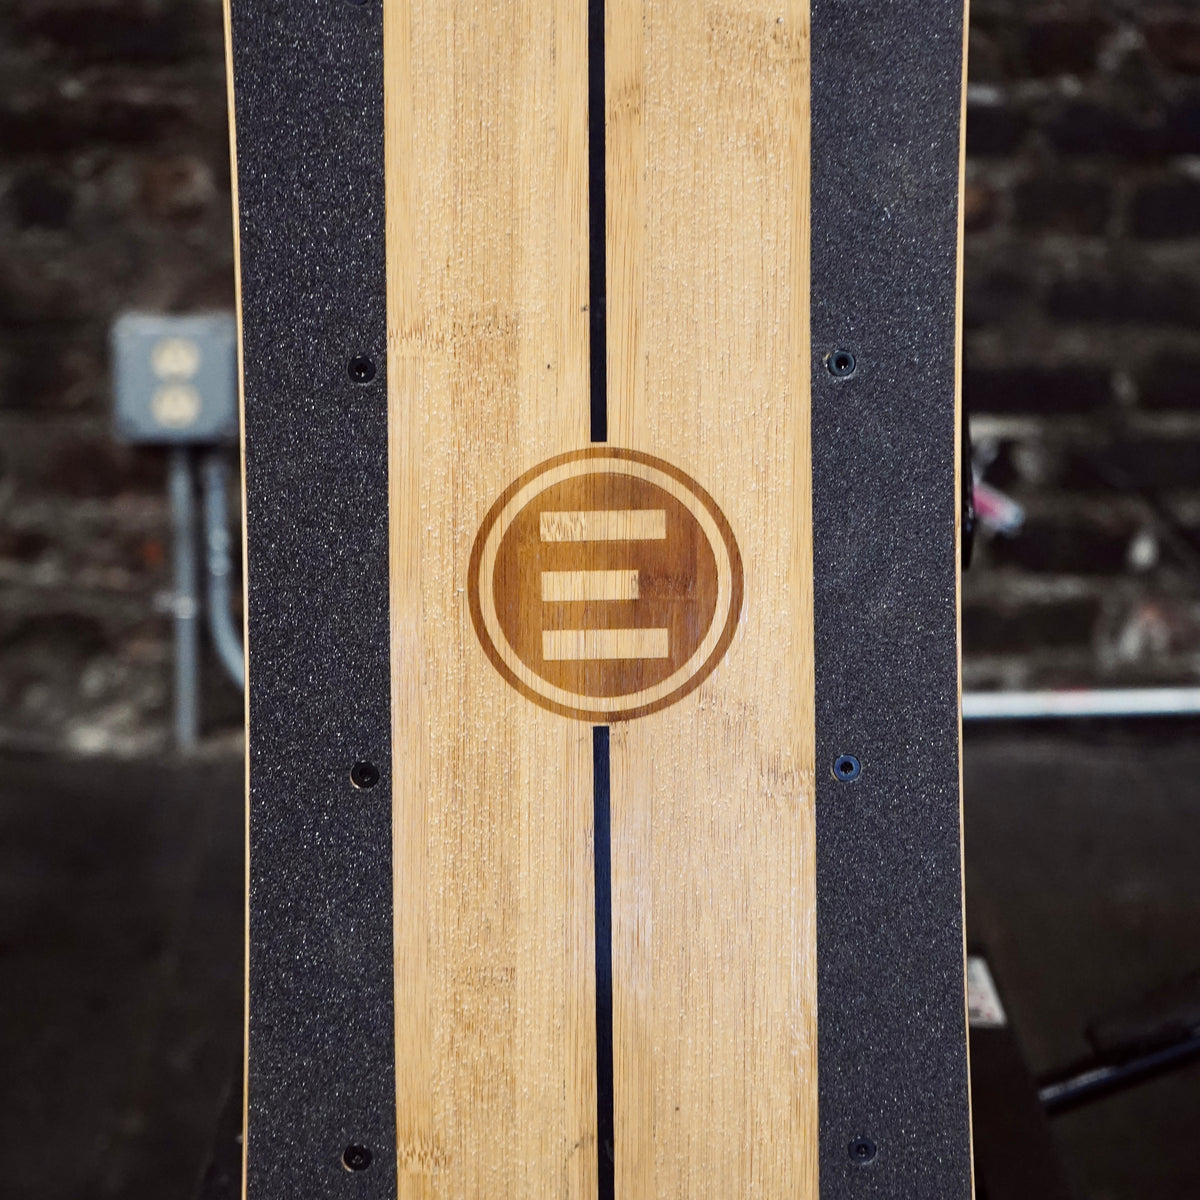 Bamboo GTR Series 2 - Evolve Electric Skateboard